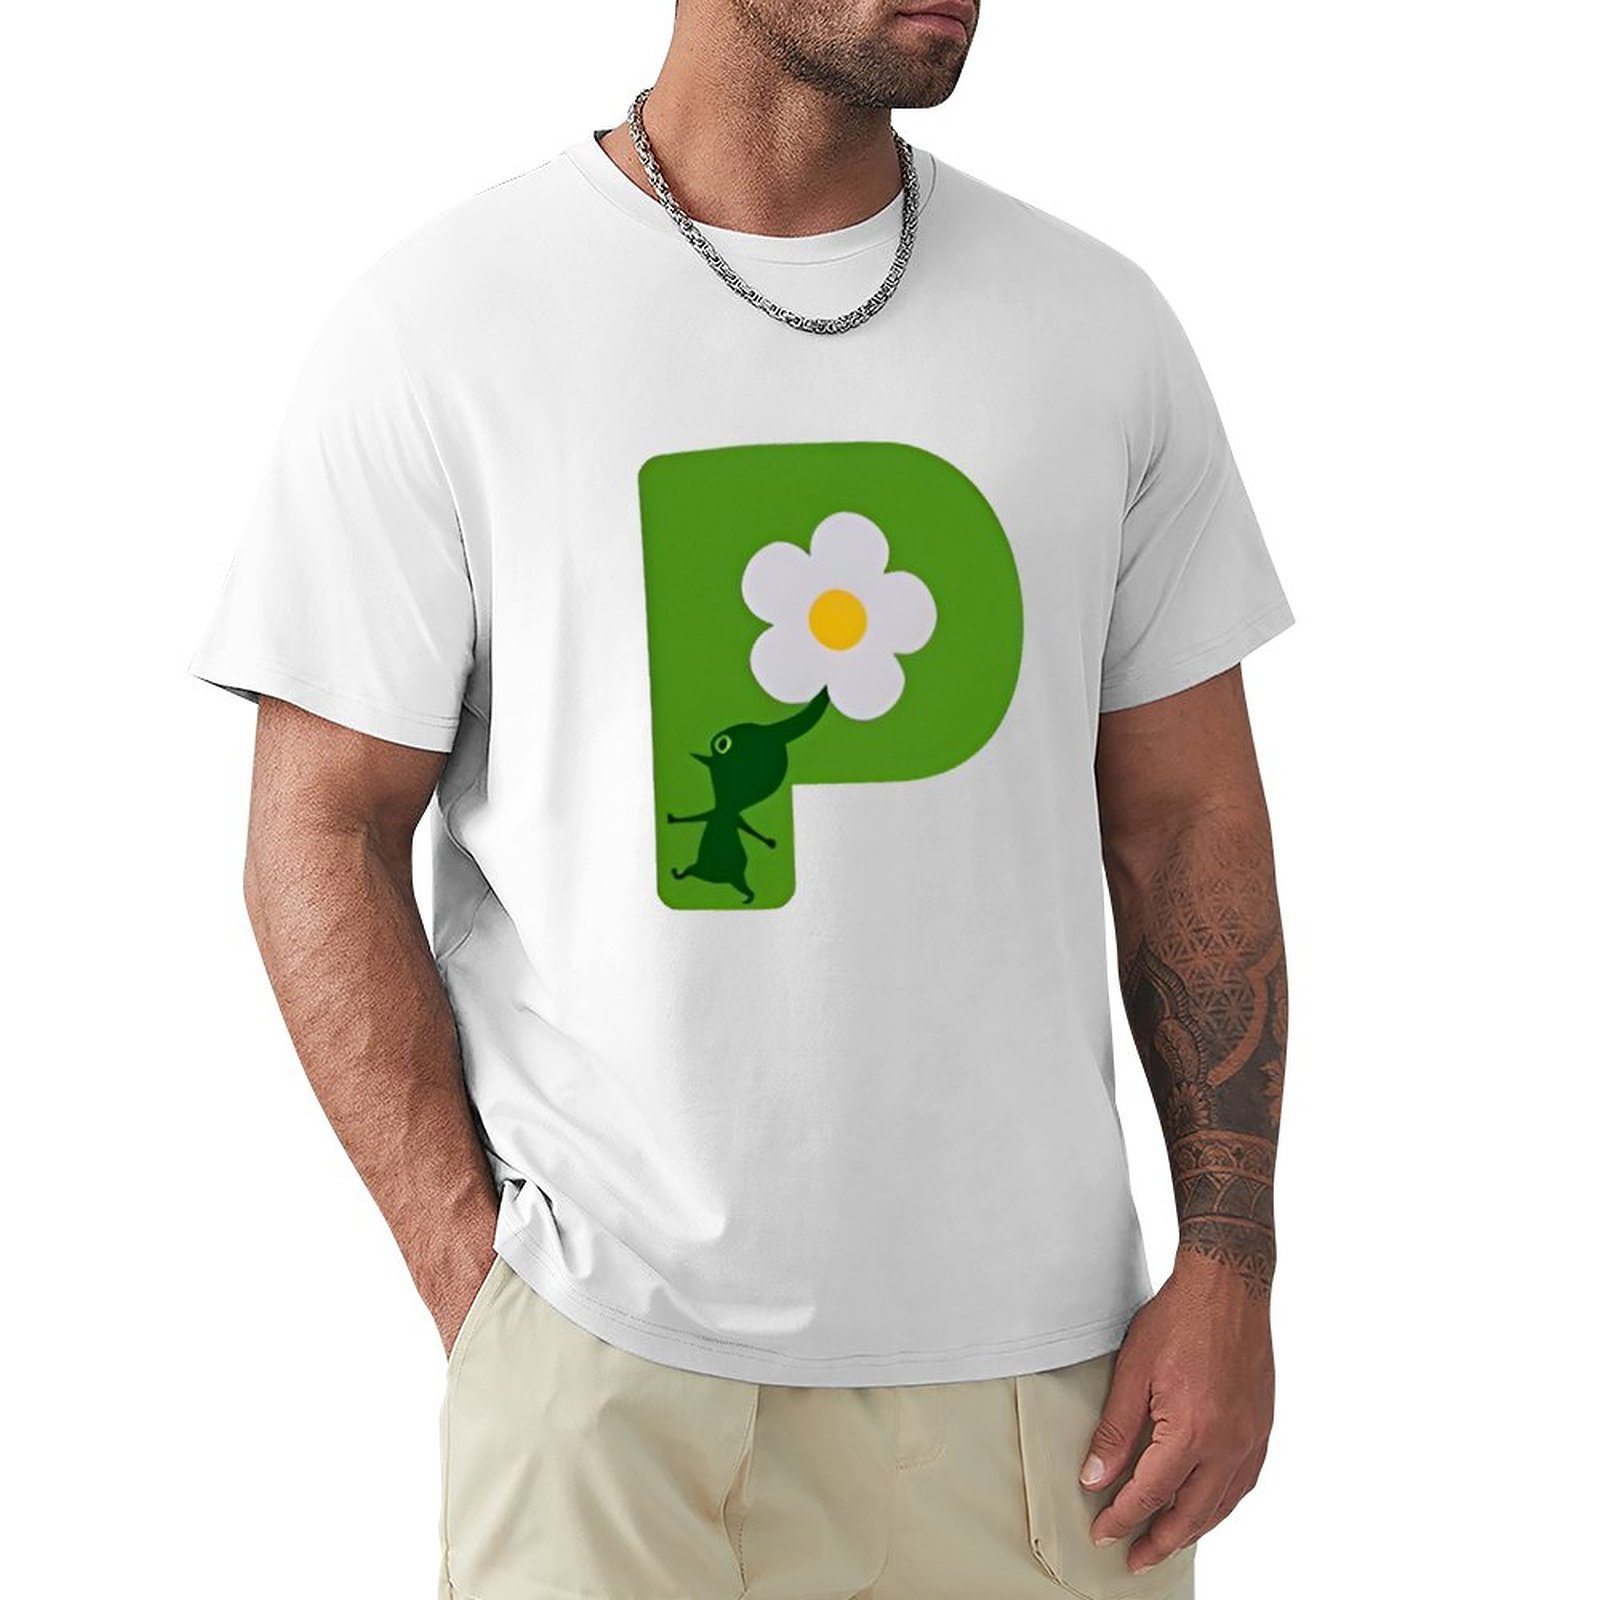 Pikmin Logo T Shirt Aesthetic clothing shirts graphic tees Men s clothing - Pikmin Plush